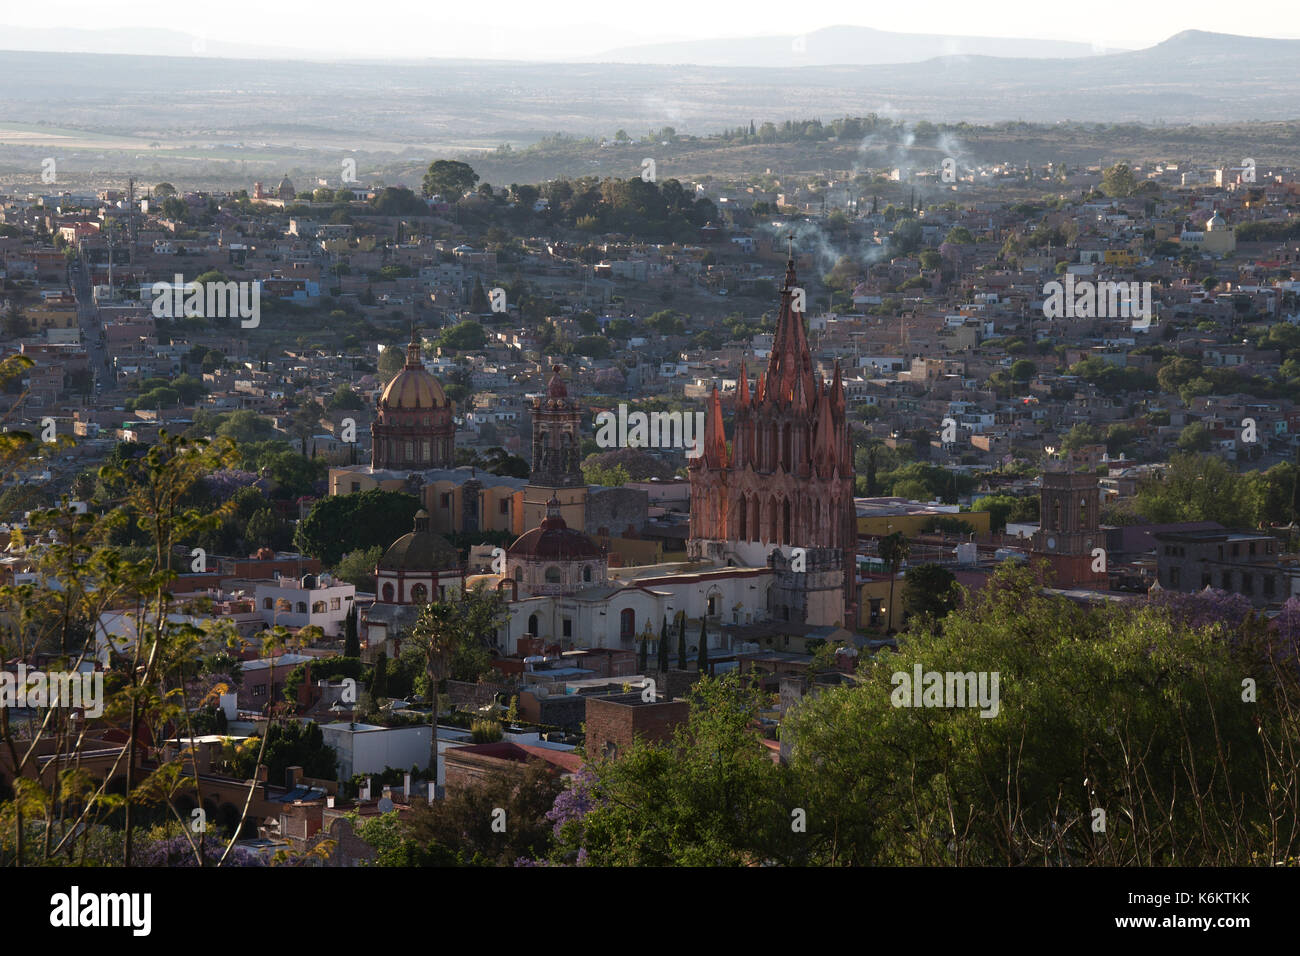 San Miguel de Allende, Guanajuato, Mexico - 2013: Panoramic view of the town. Stock Photo